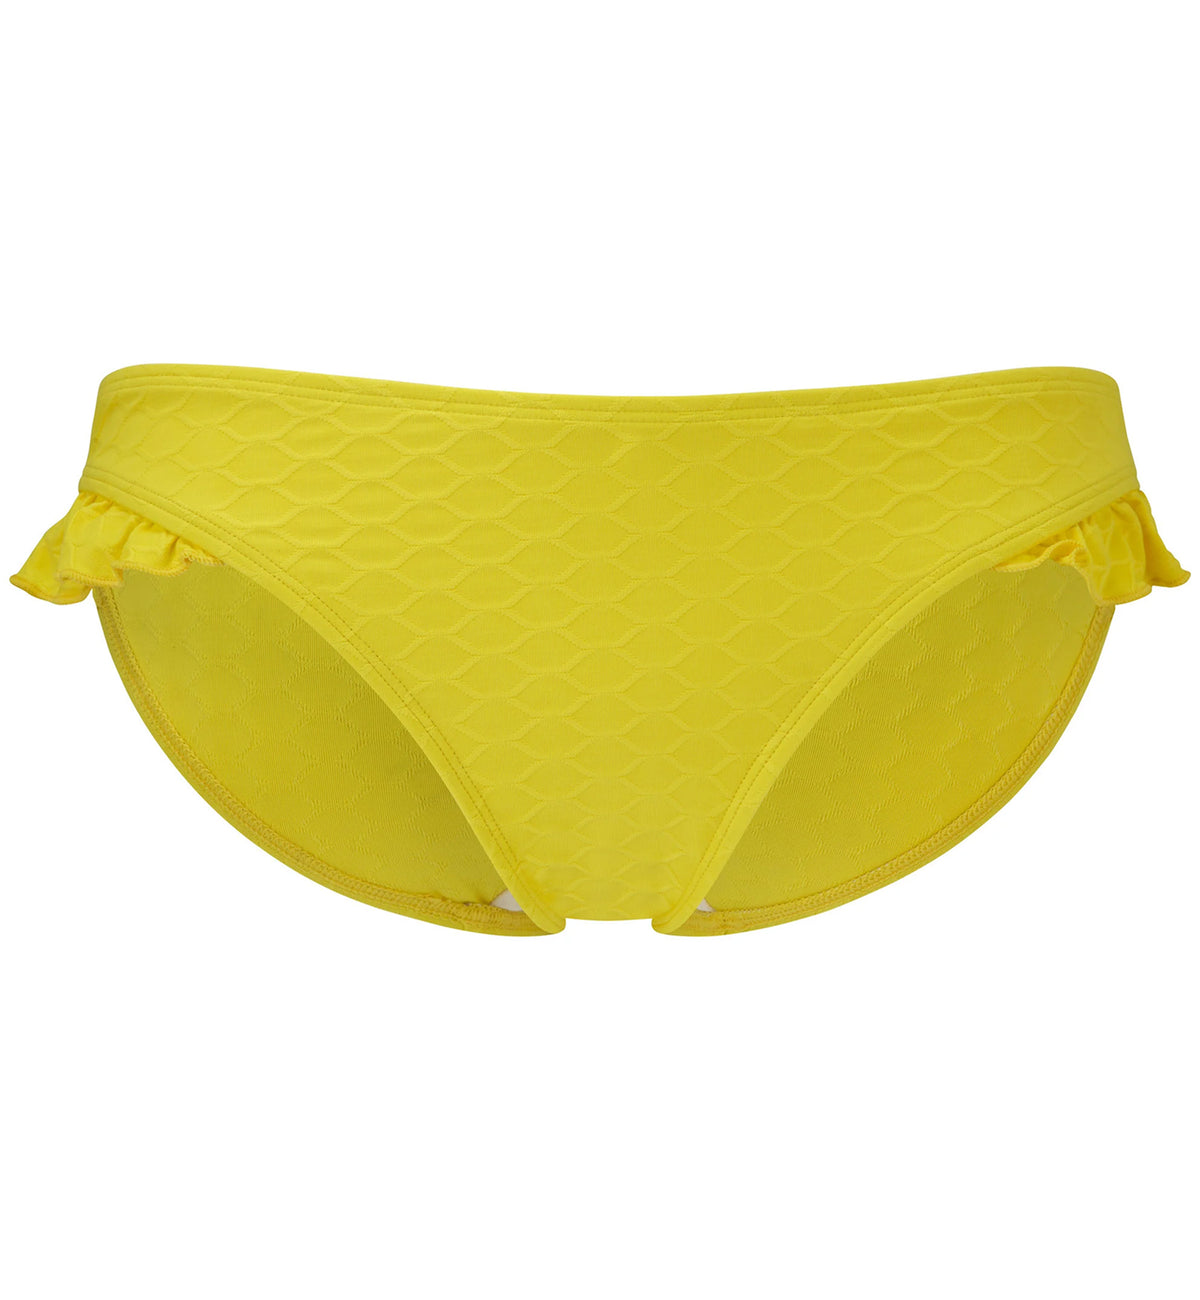 Cleo by Panache Matilda Frill Bikini Brief (CW0089),XS,Yellow - Yellow,XS